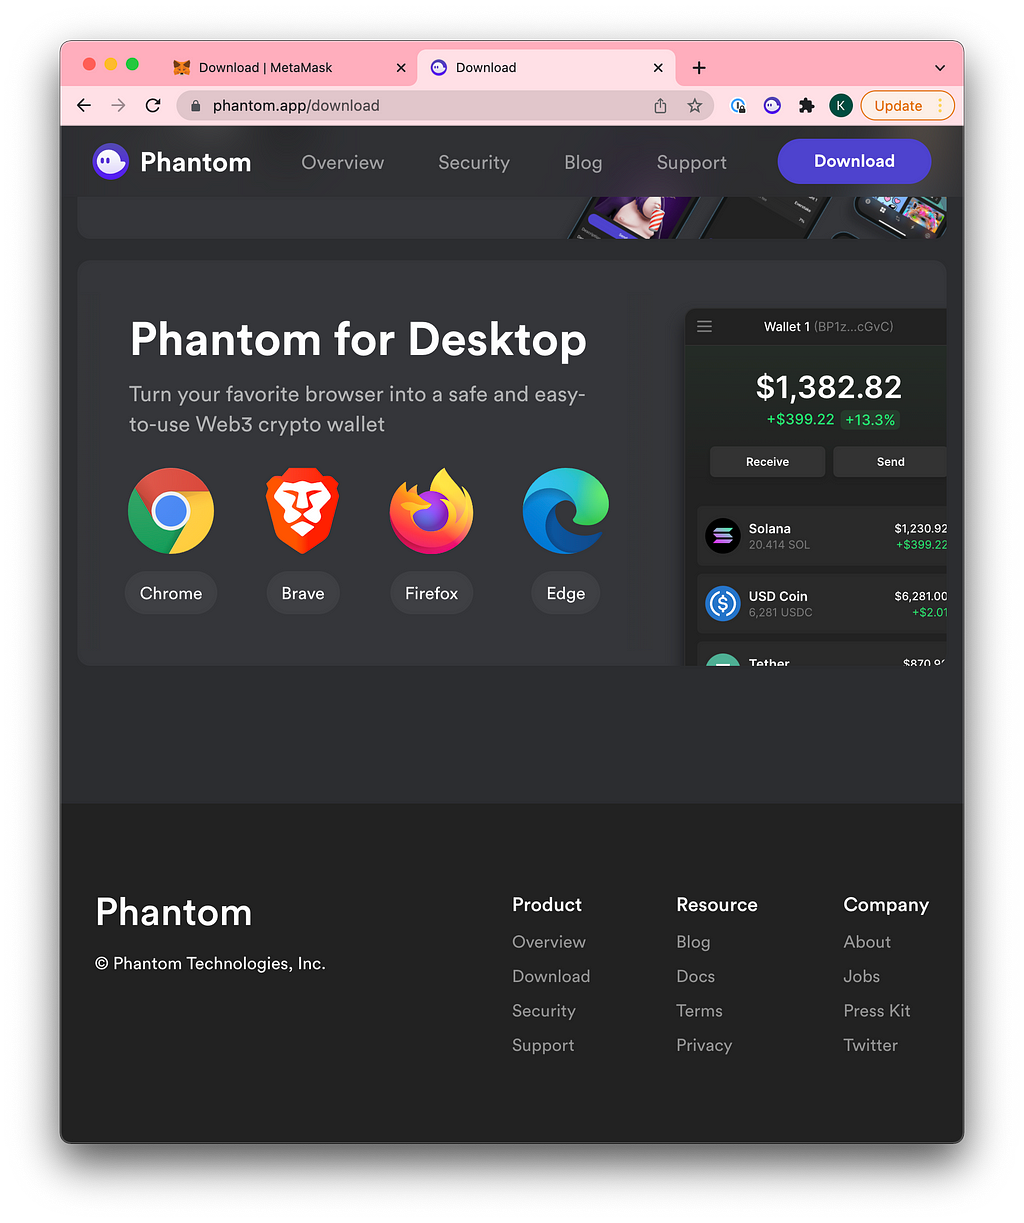 Phantom download page